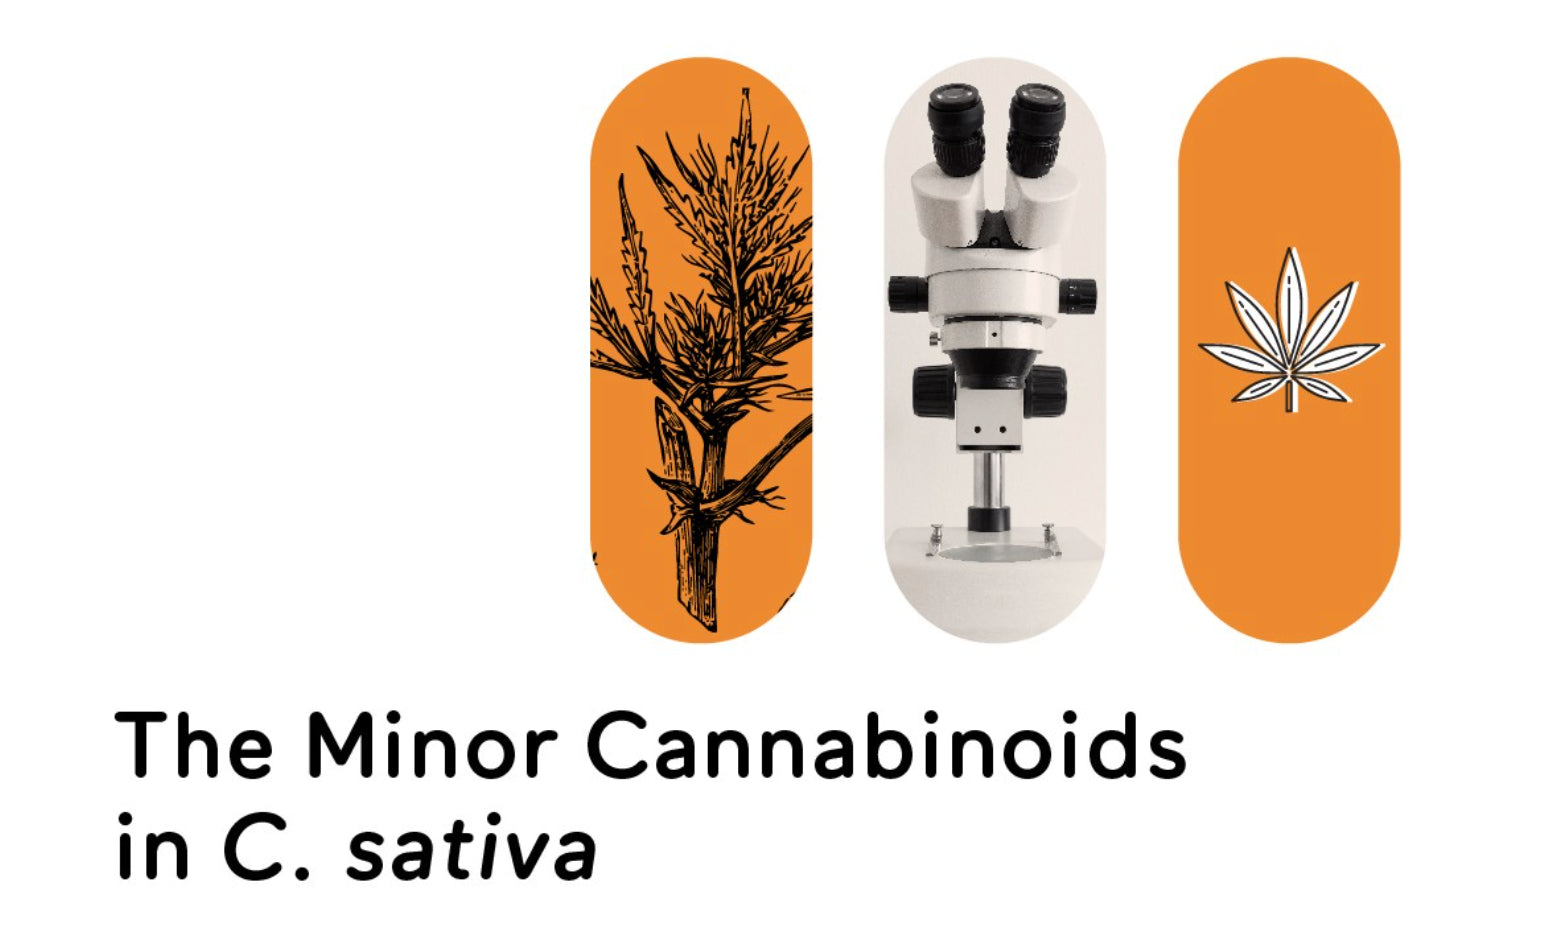 The Minor Cannabinoids in C. sativa